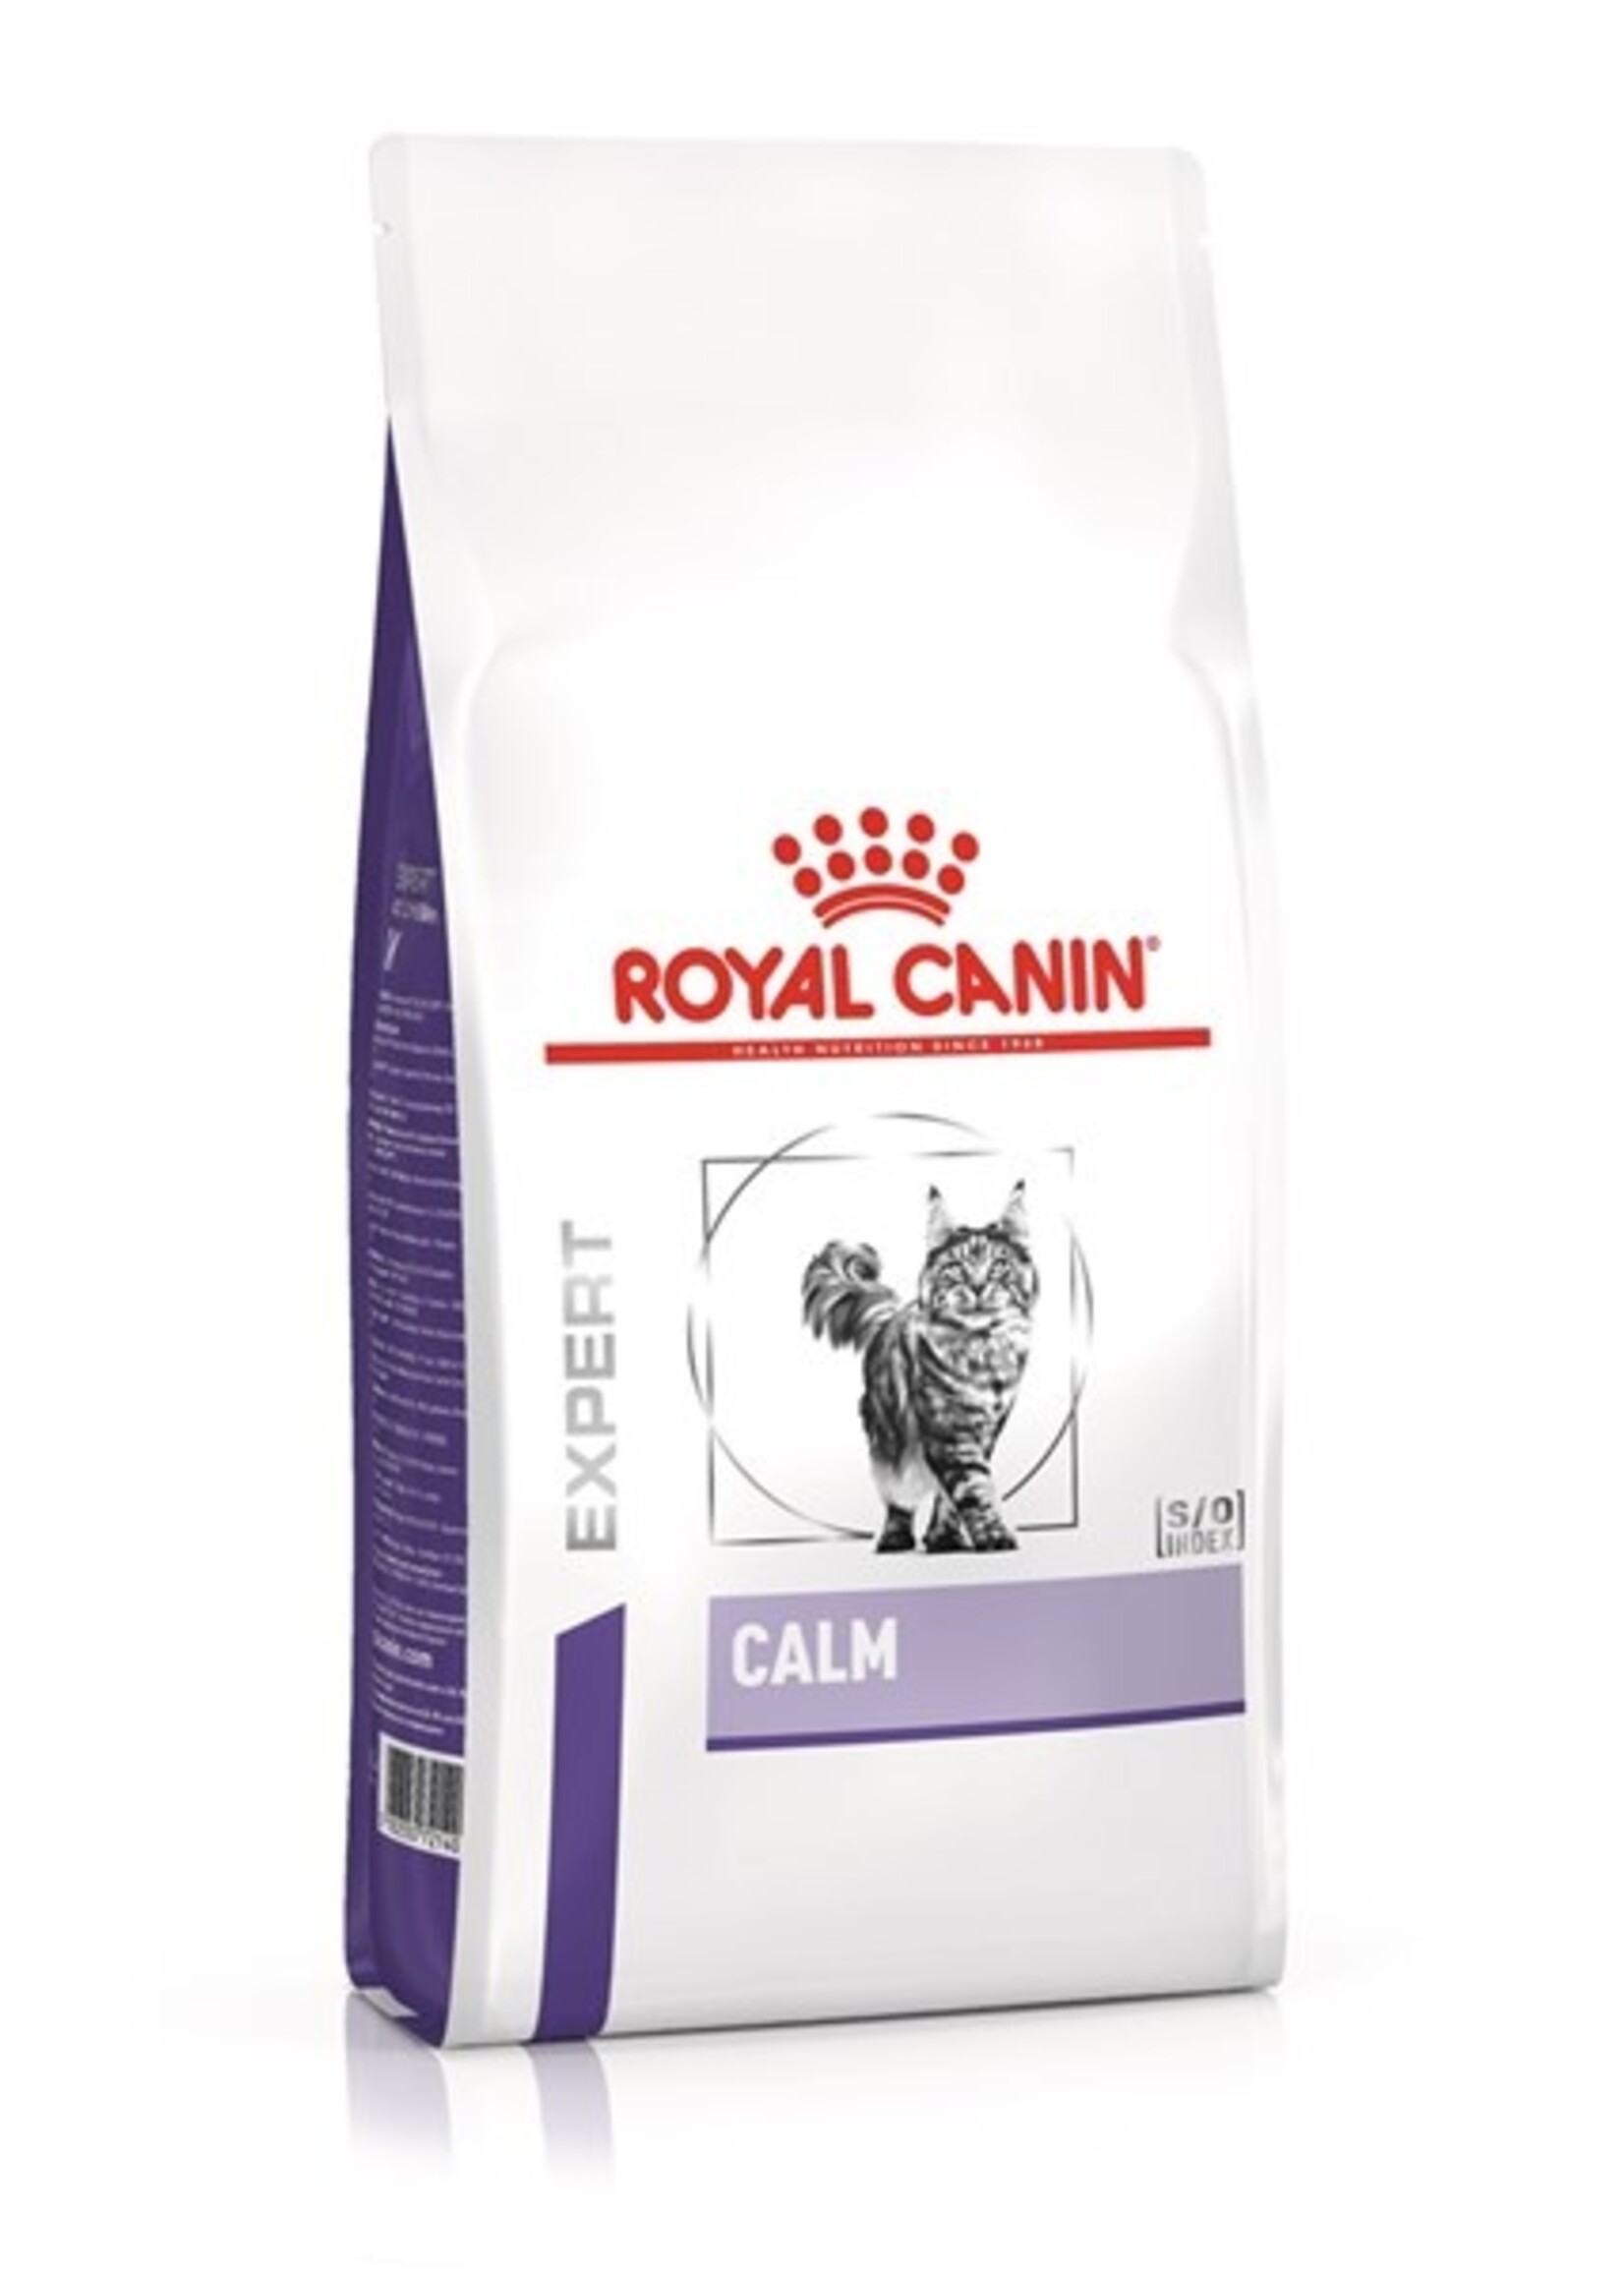 Royal Canin Royal Canin Vdiet Calm Katze 4kg